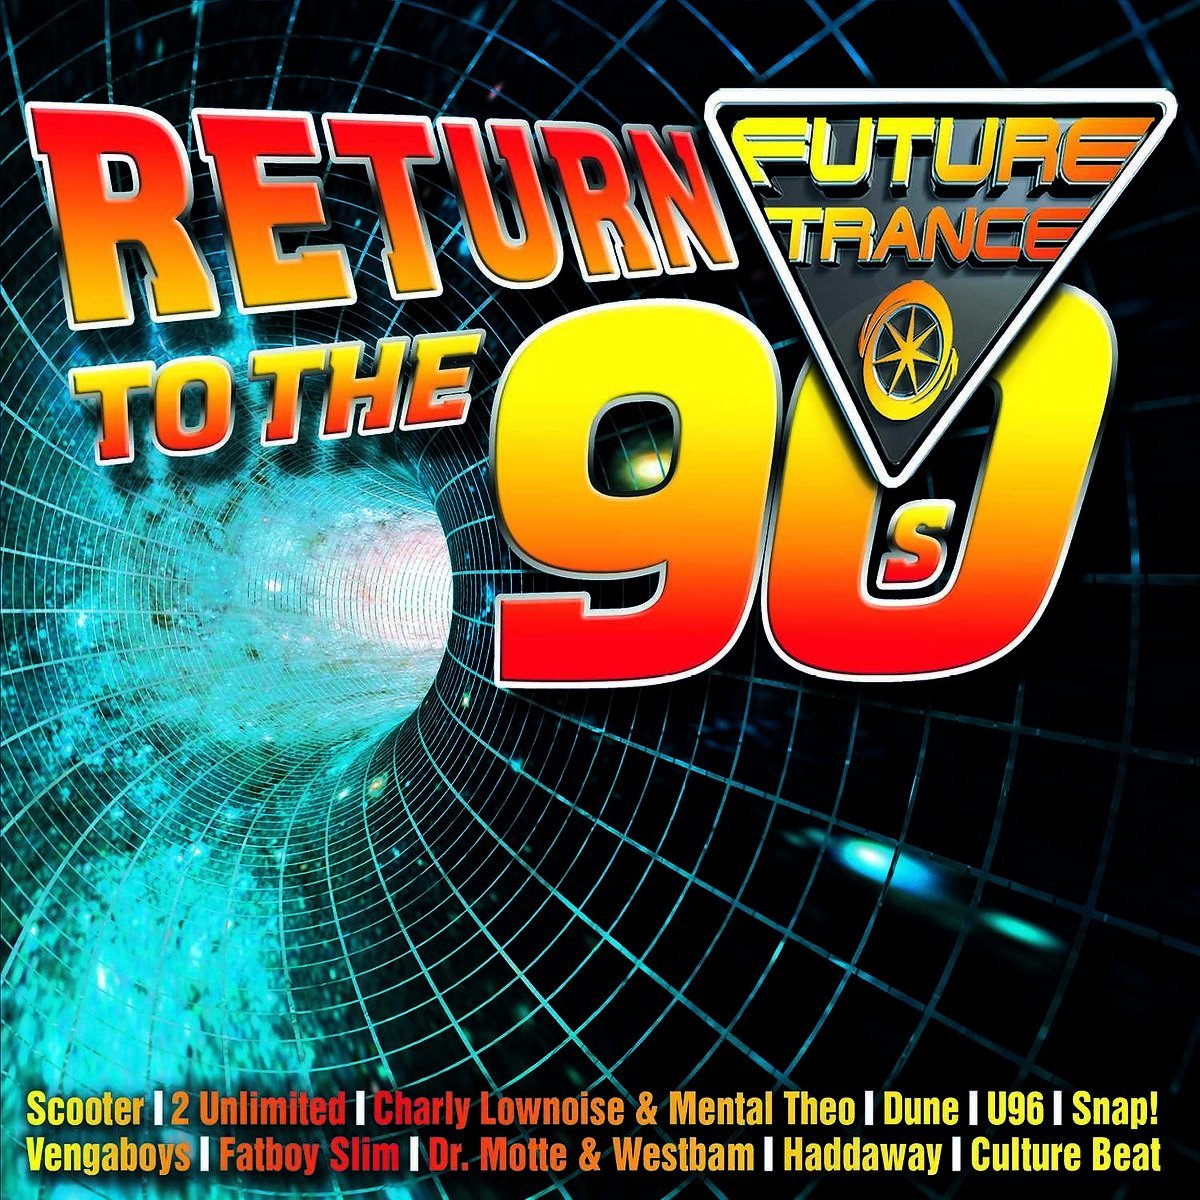 Транс 90 х. Future Trance, Return to the 90s. Евродэнс сборник. Techno Dance 90 обложка. Диск Dance 2 Trance.